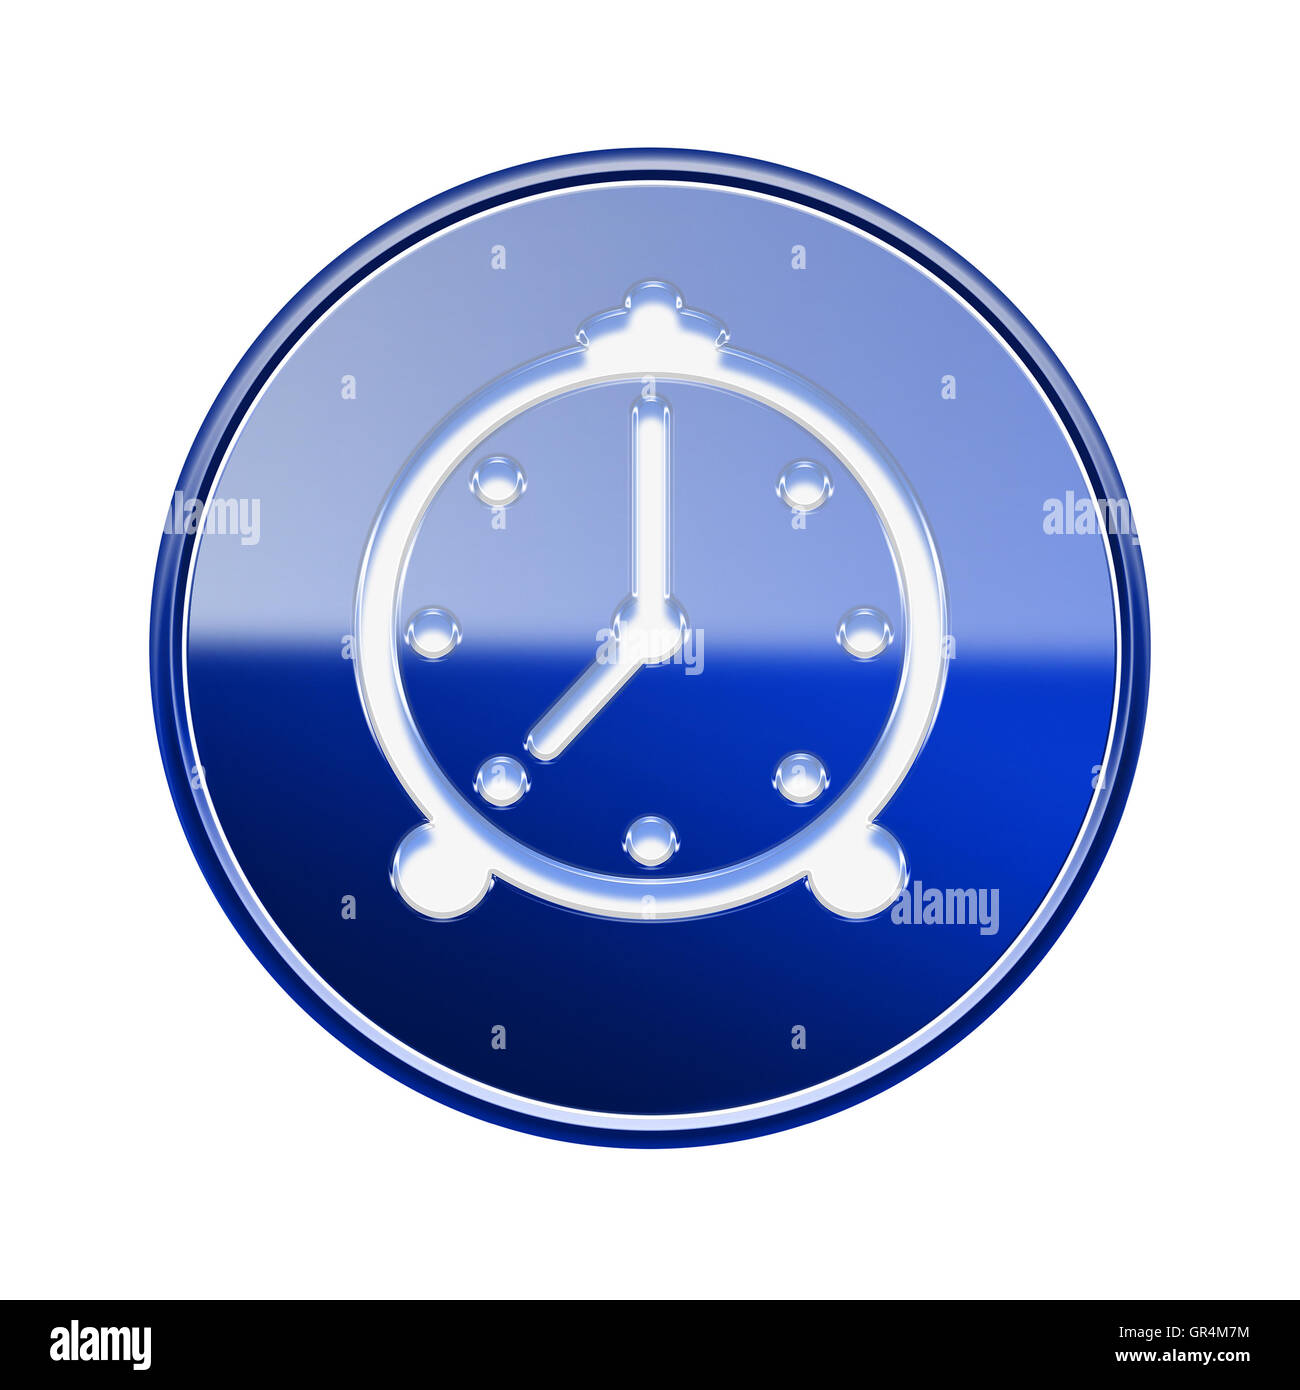 alarm clock icon glossy blue, isolated on white background Stock Photo